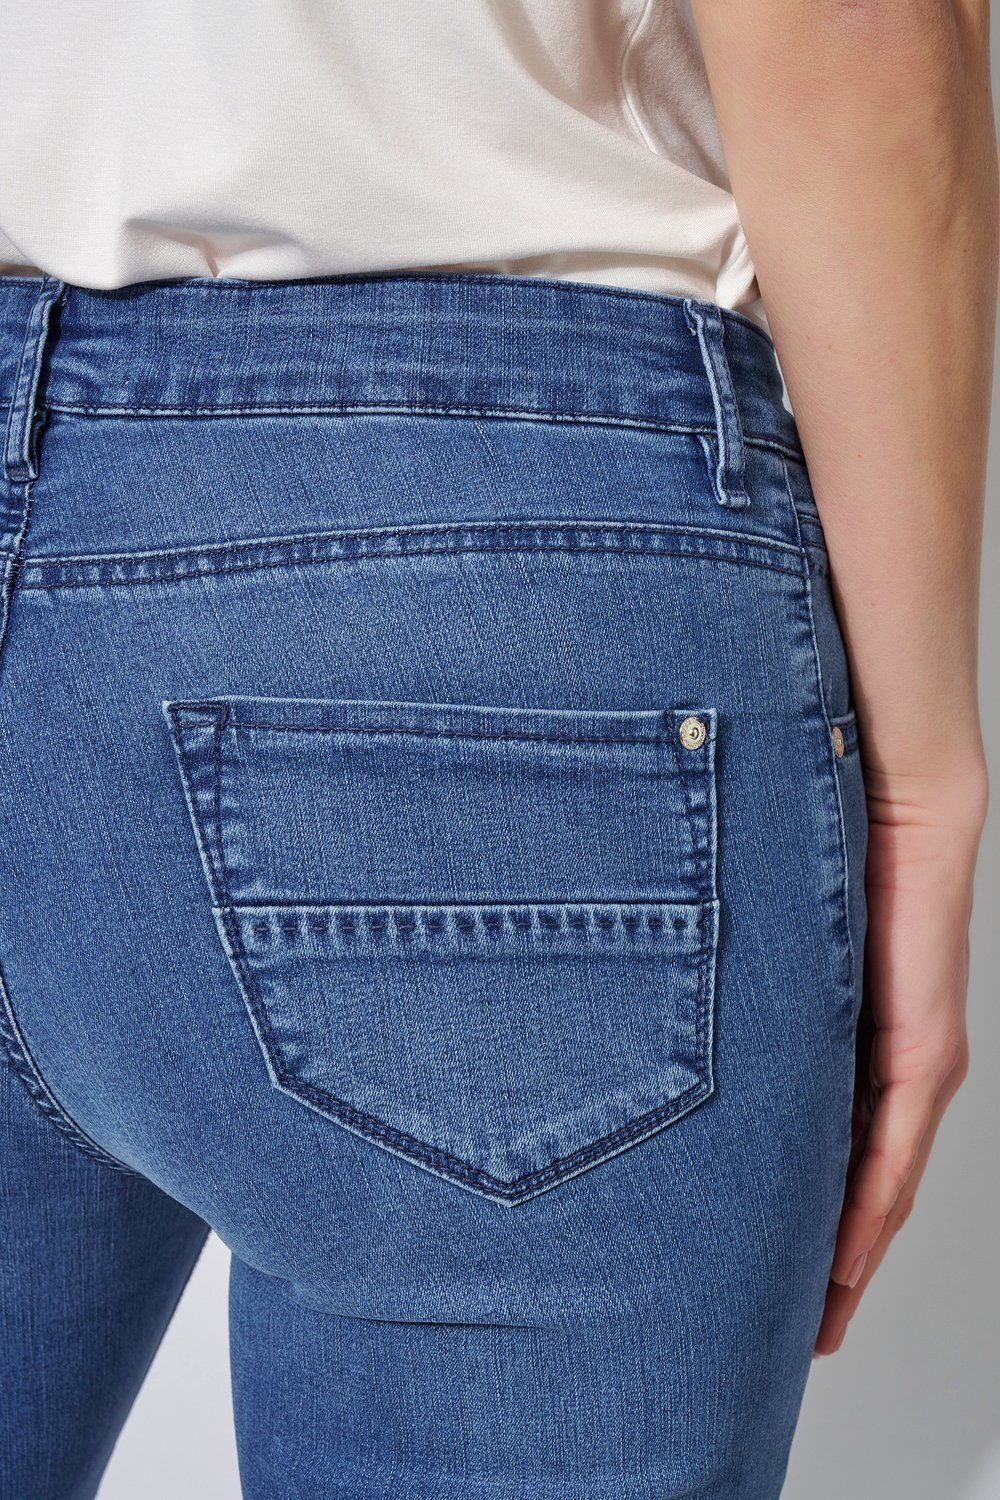 TONI blue 5-Pocket-Jeans bleached